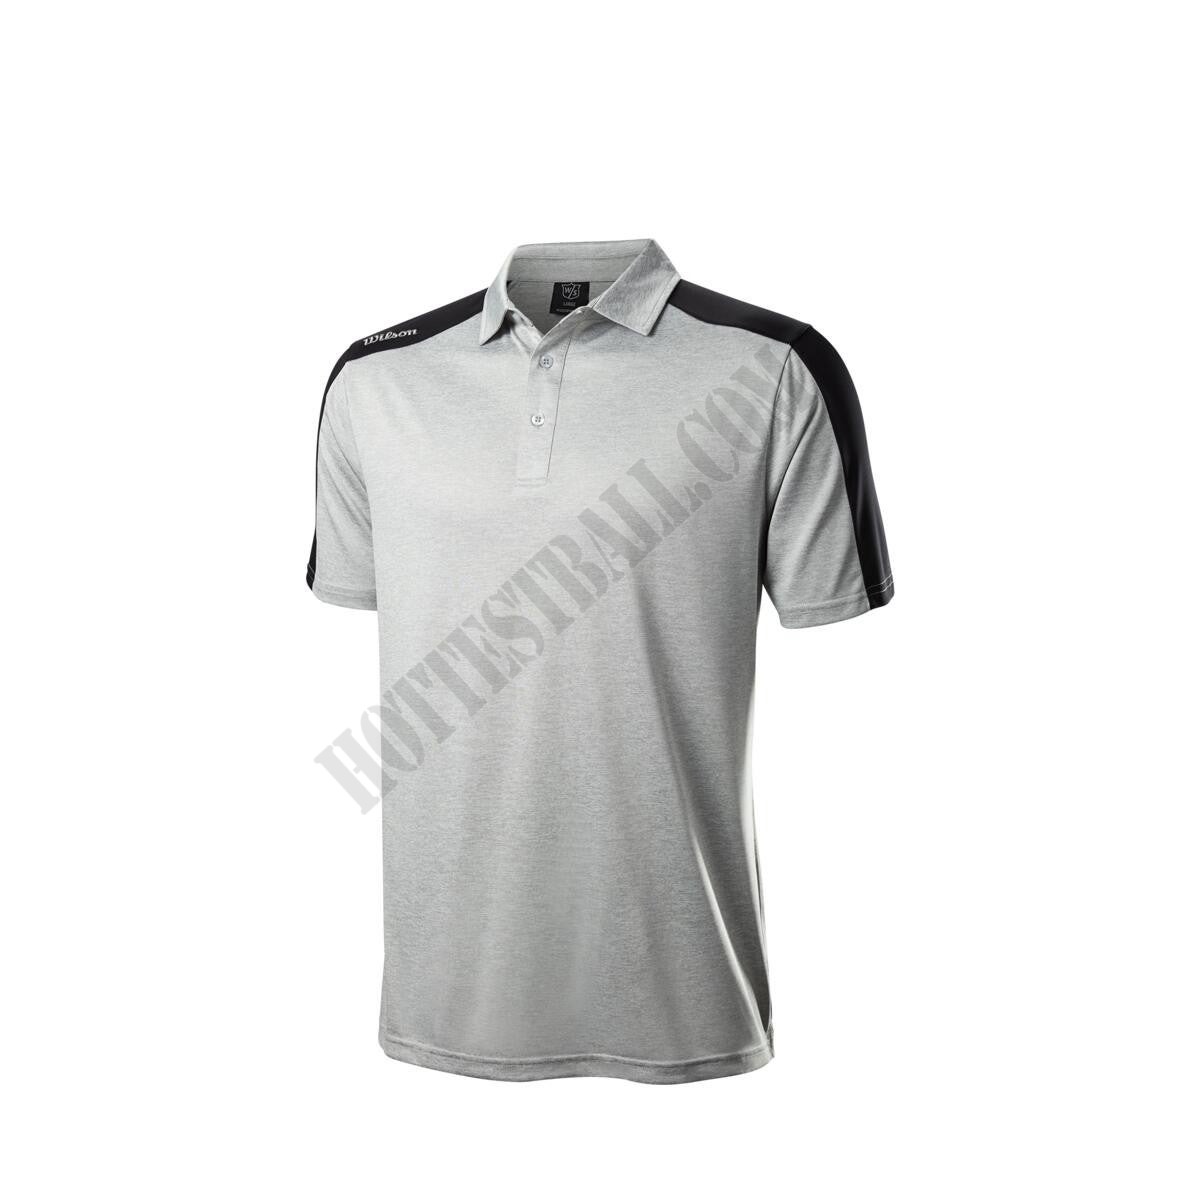 Men's Two-Tone Polo Shirt - Wilson Discount Store - -0